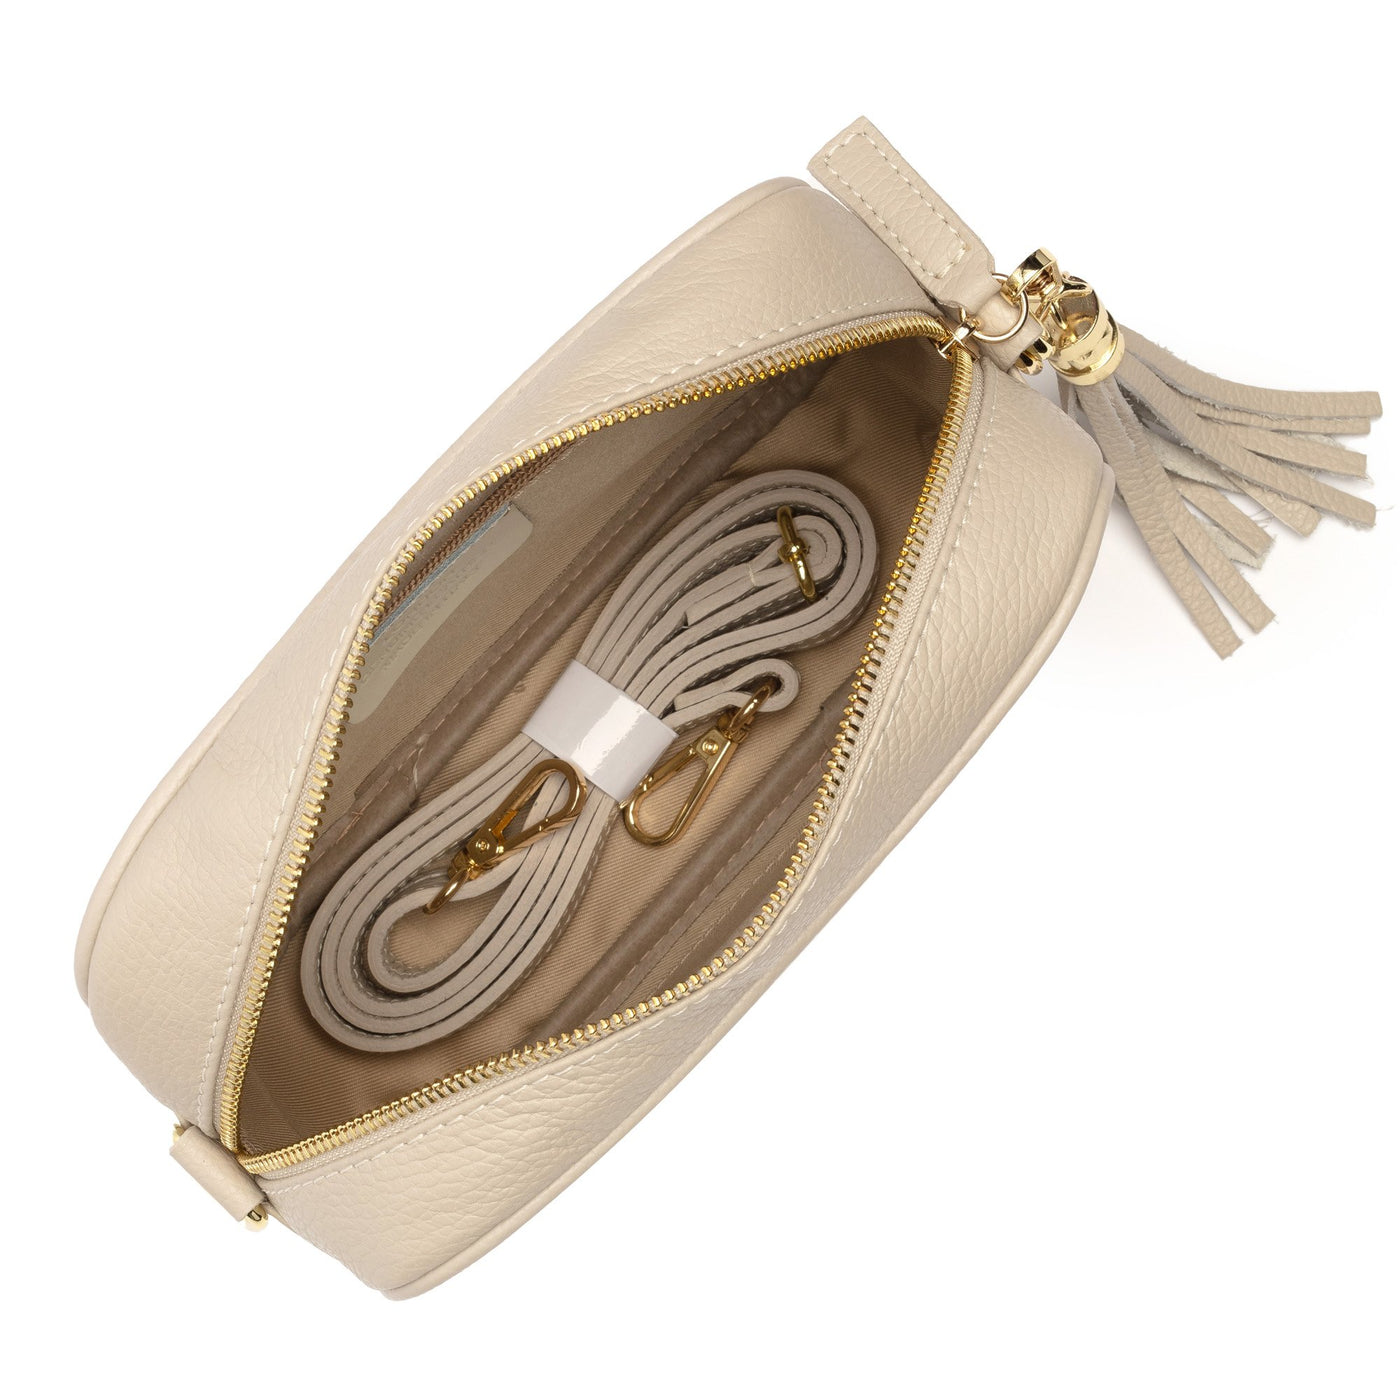 Elie Beaumont Designer Leather Crossbody Bag - Stone (GOLD Fittings)